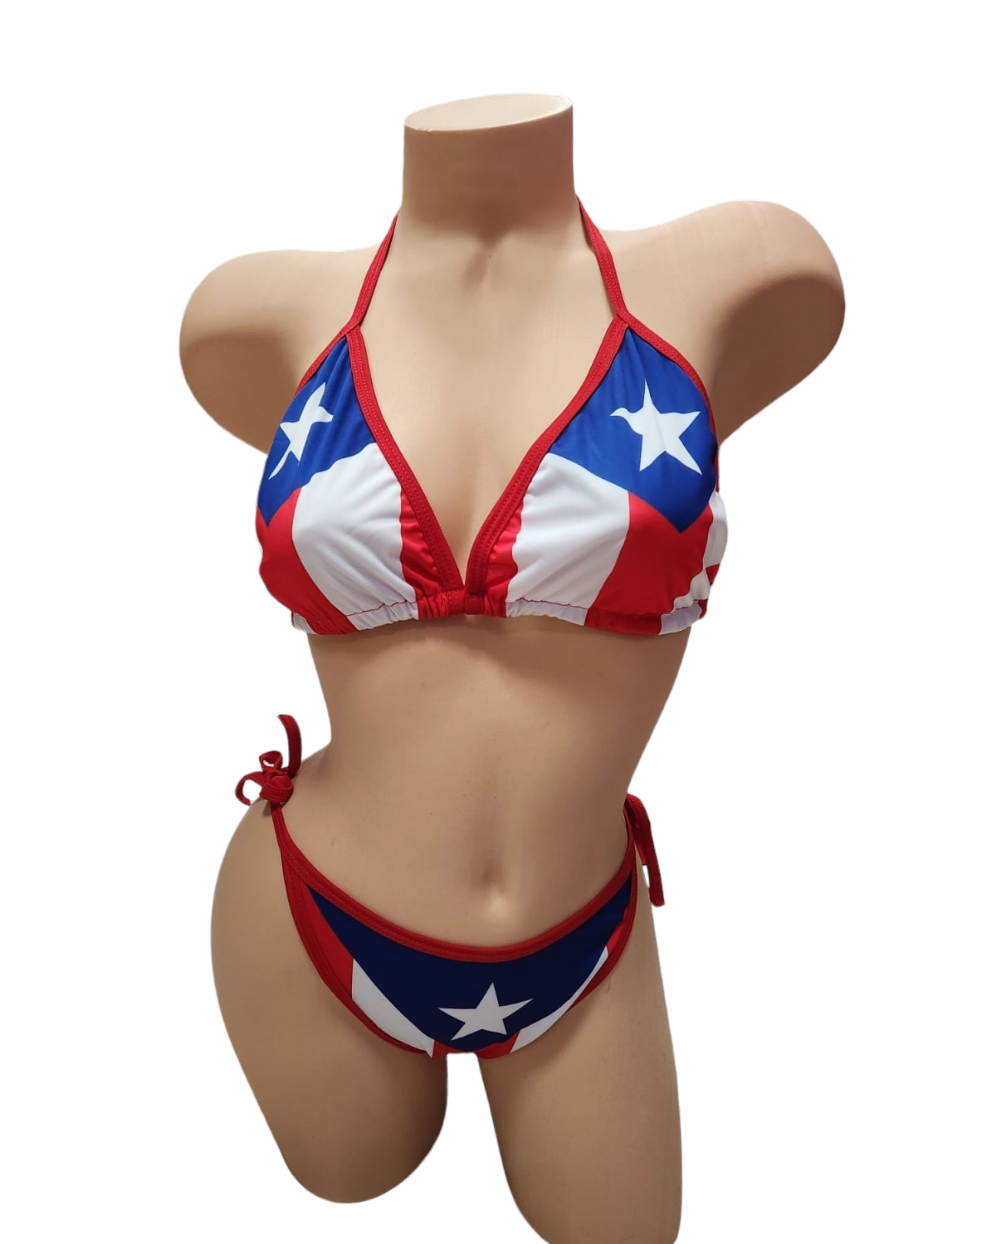 Puerto Rican swimsuit